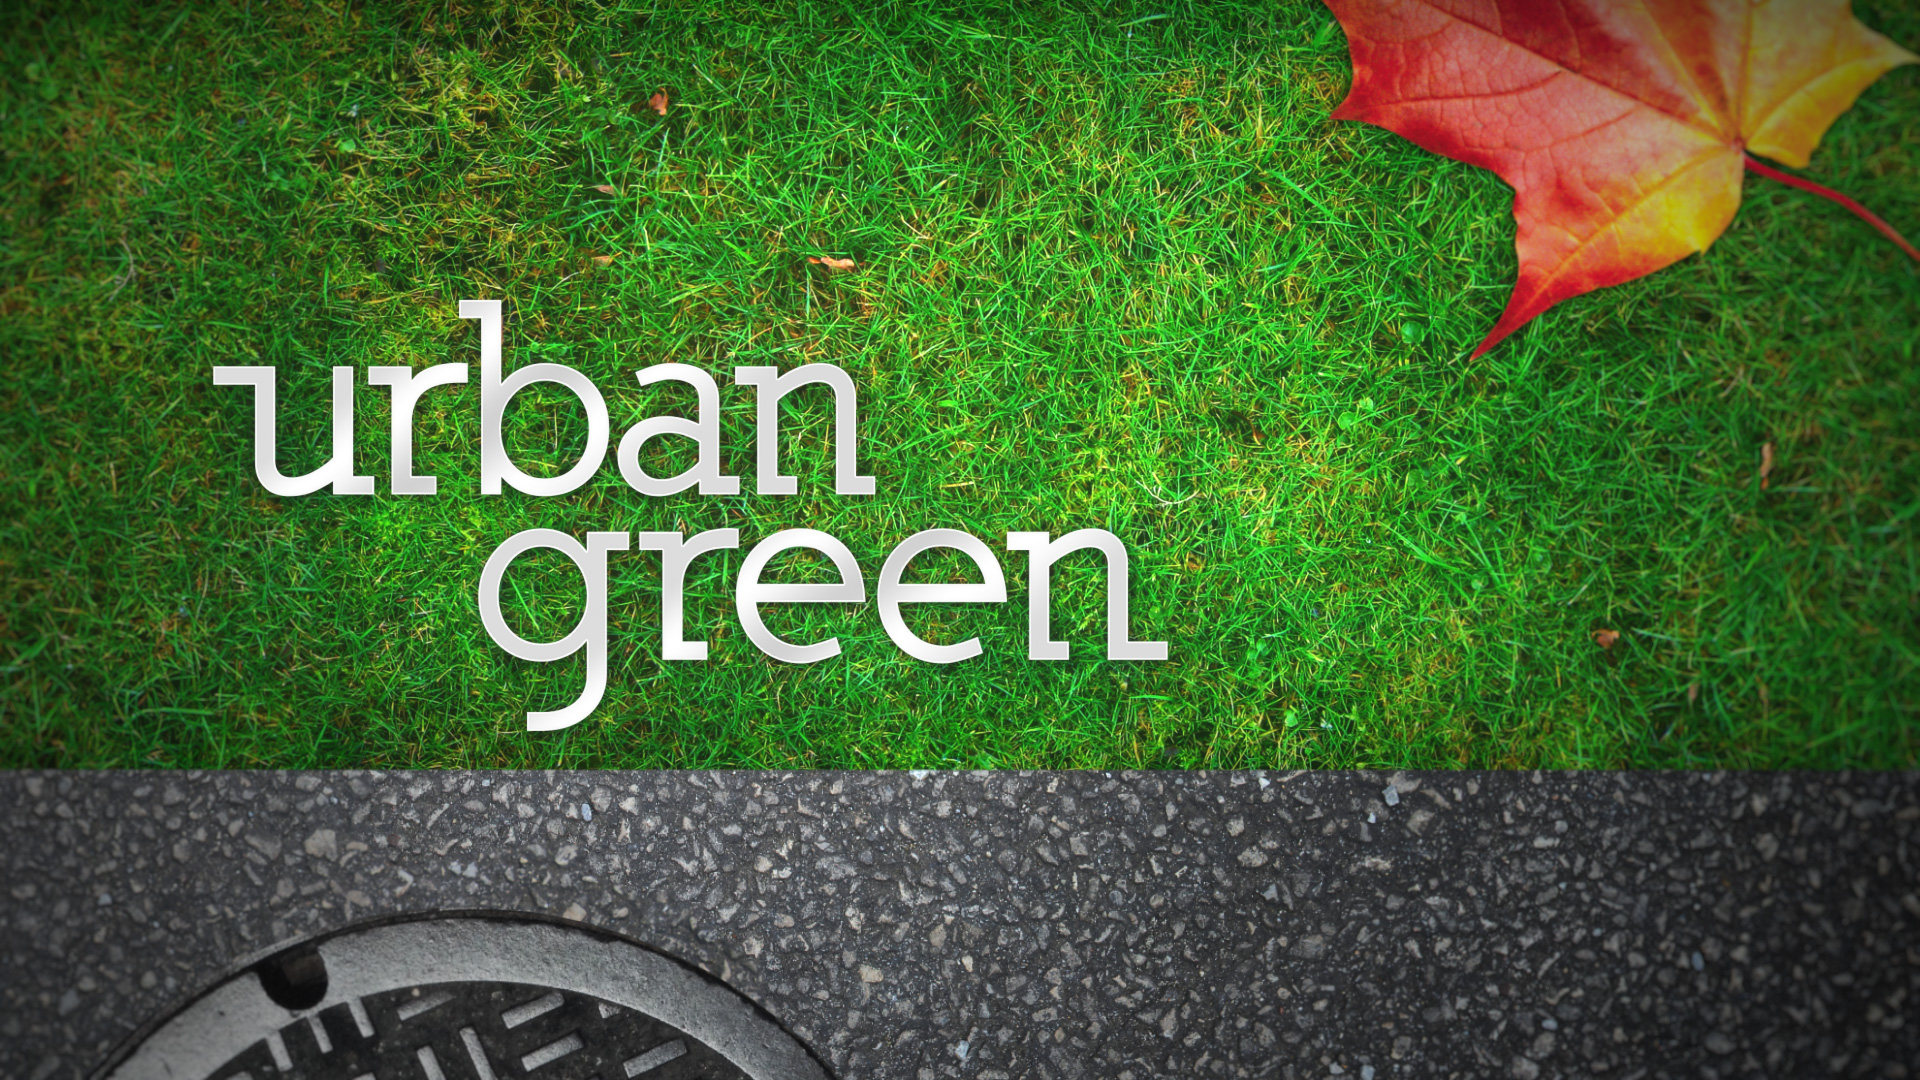 urban green